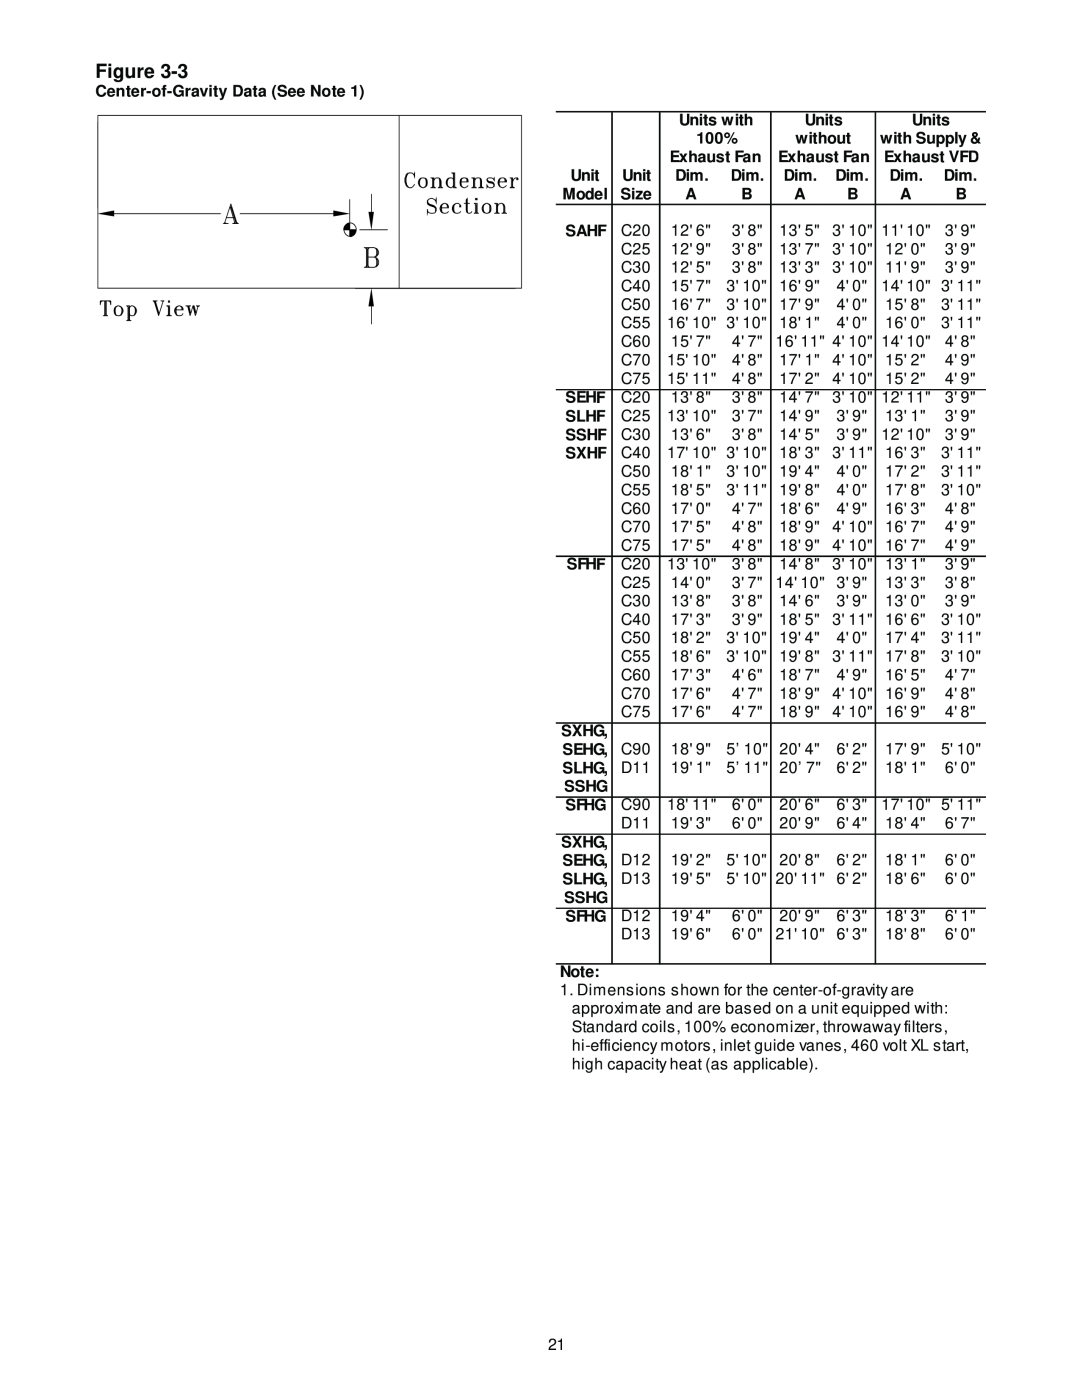 Trane RT-SVX10C-EN specifications Figure, Center-of-GravityData See Note 